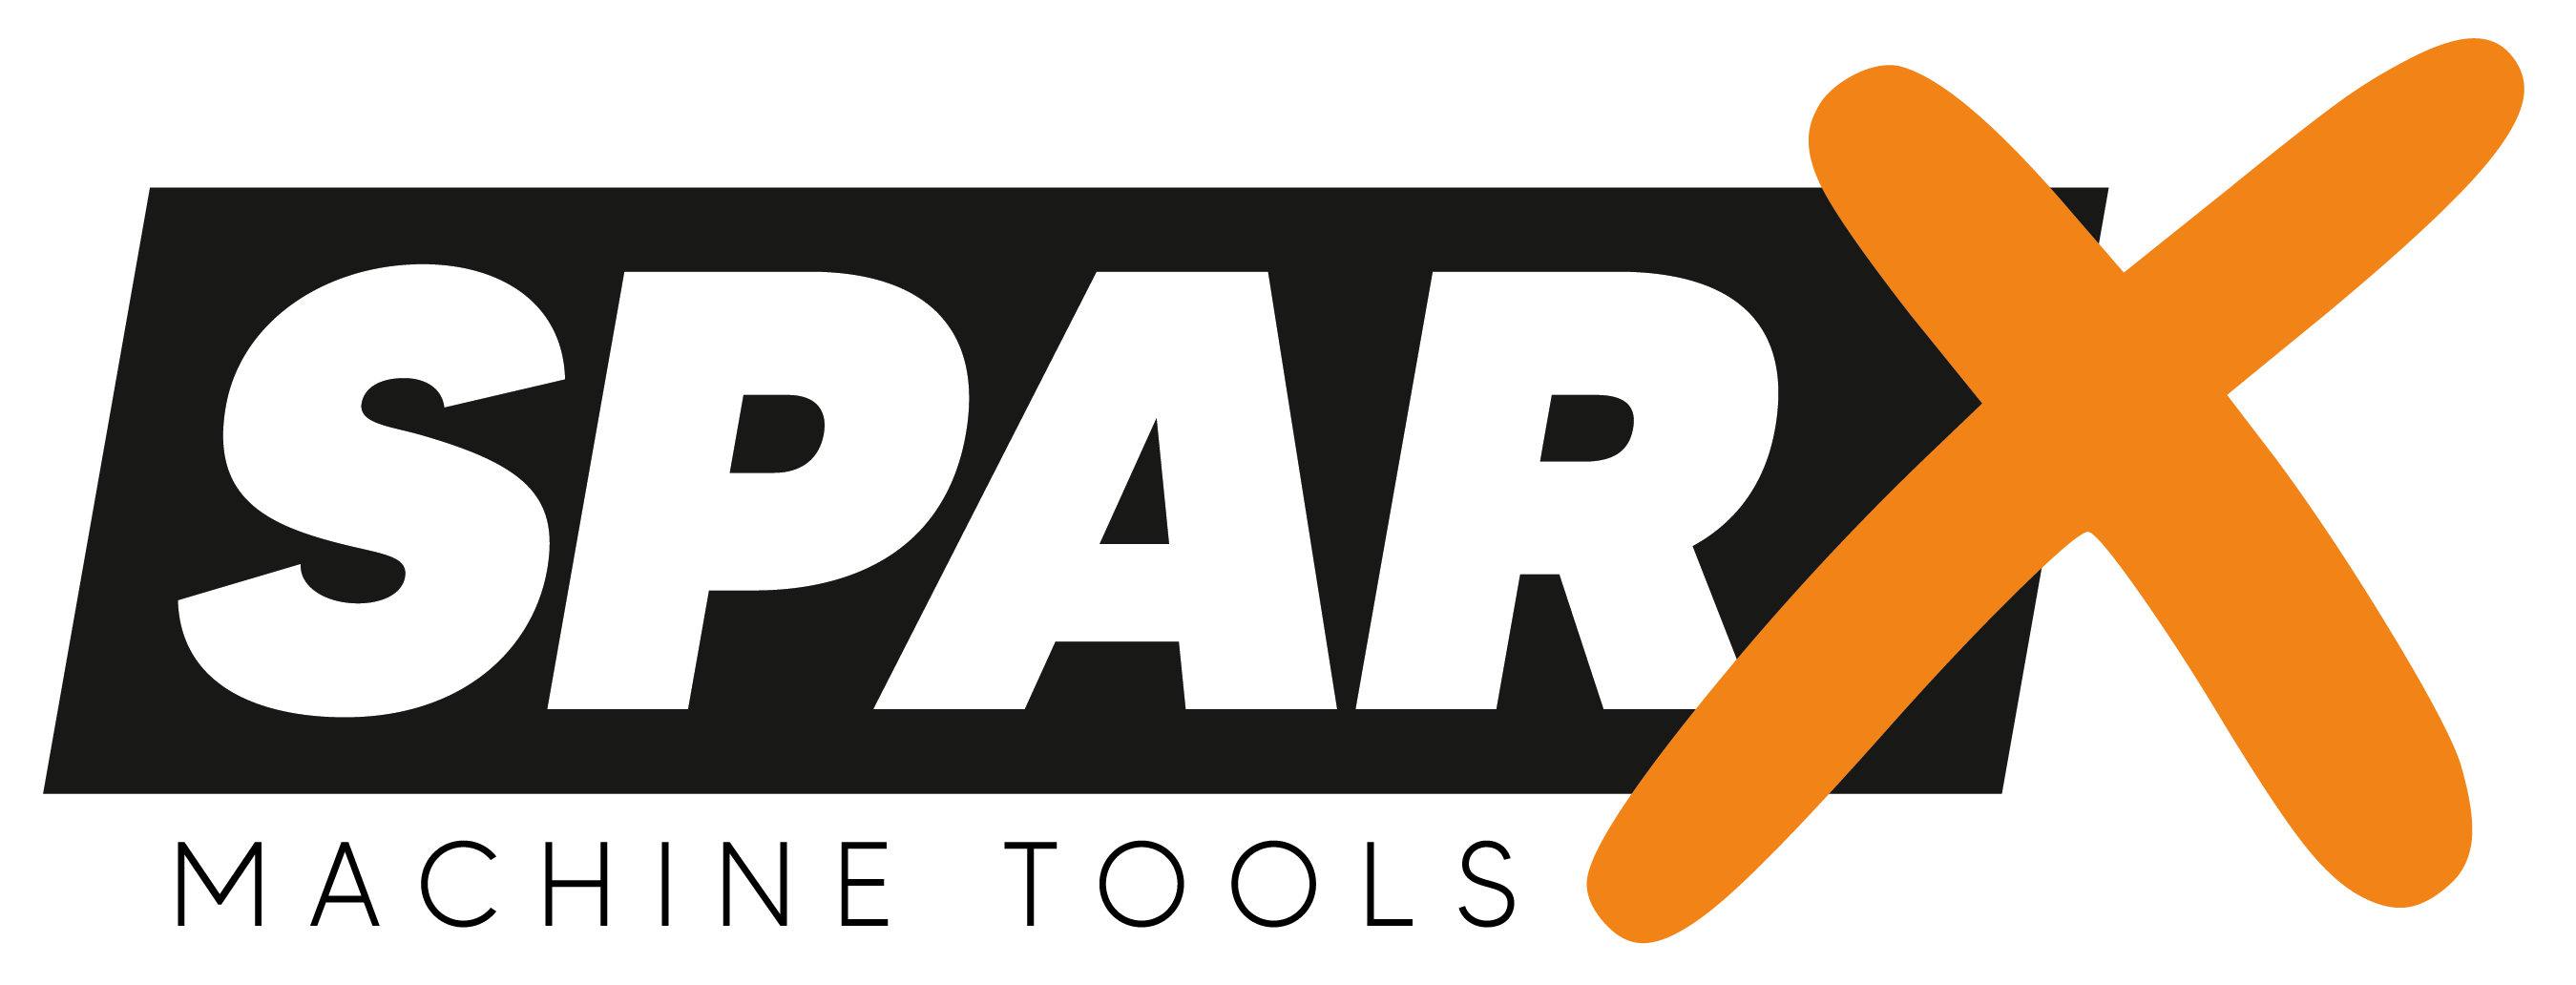 Sparx Machine Tools Limited